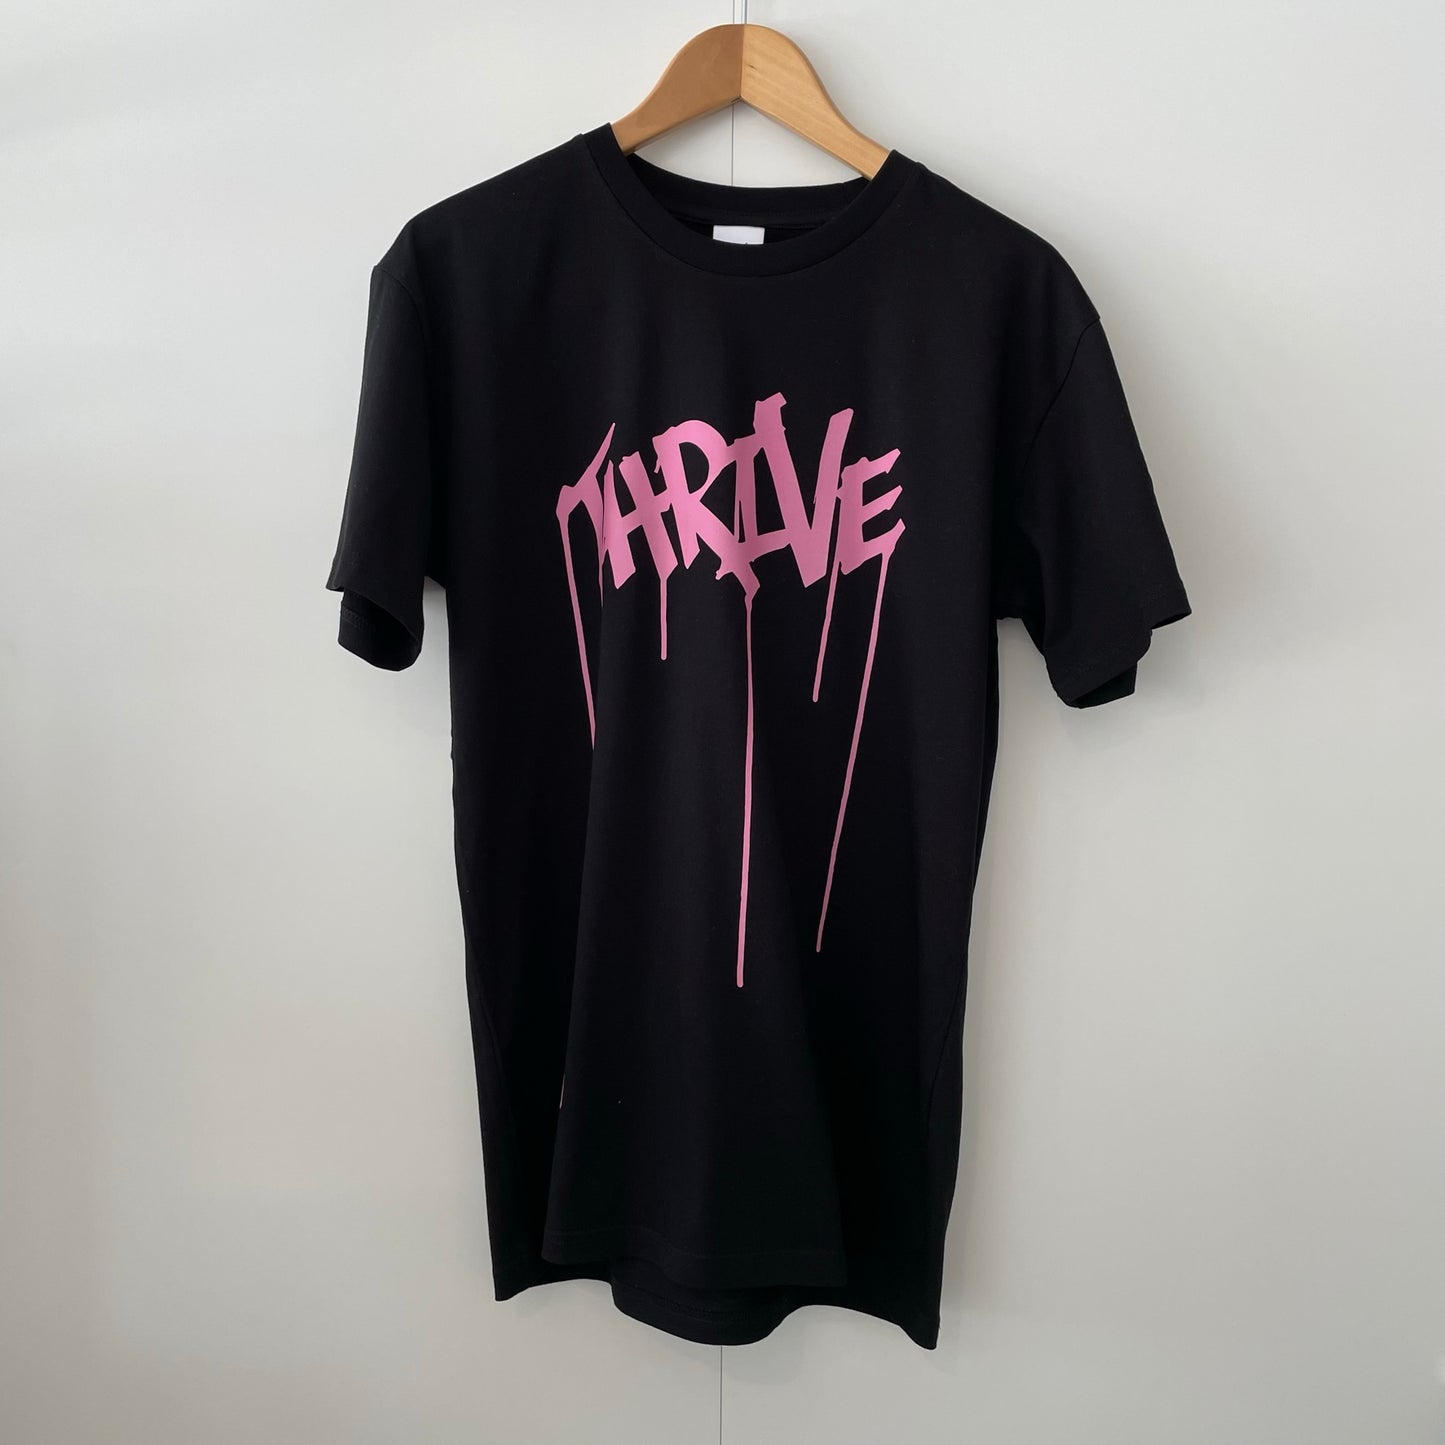 Thrive pink on black